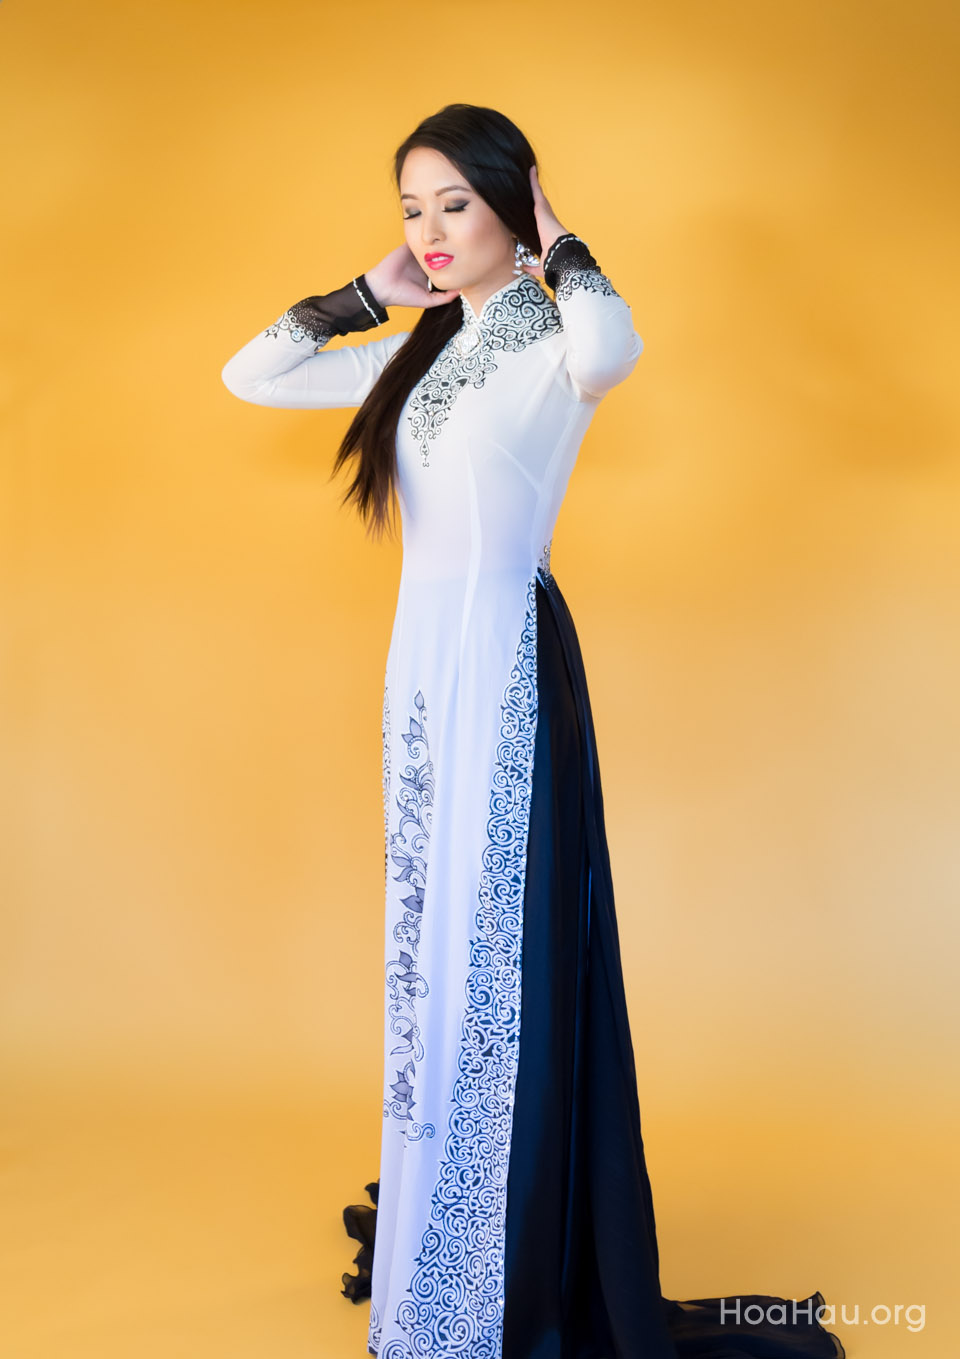 Calendar 2014 Photoshoot - Miss Vietnam of Northern California 2014 - Image 121